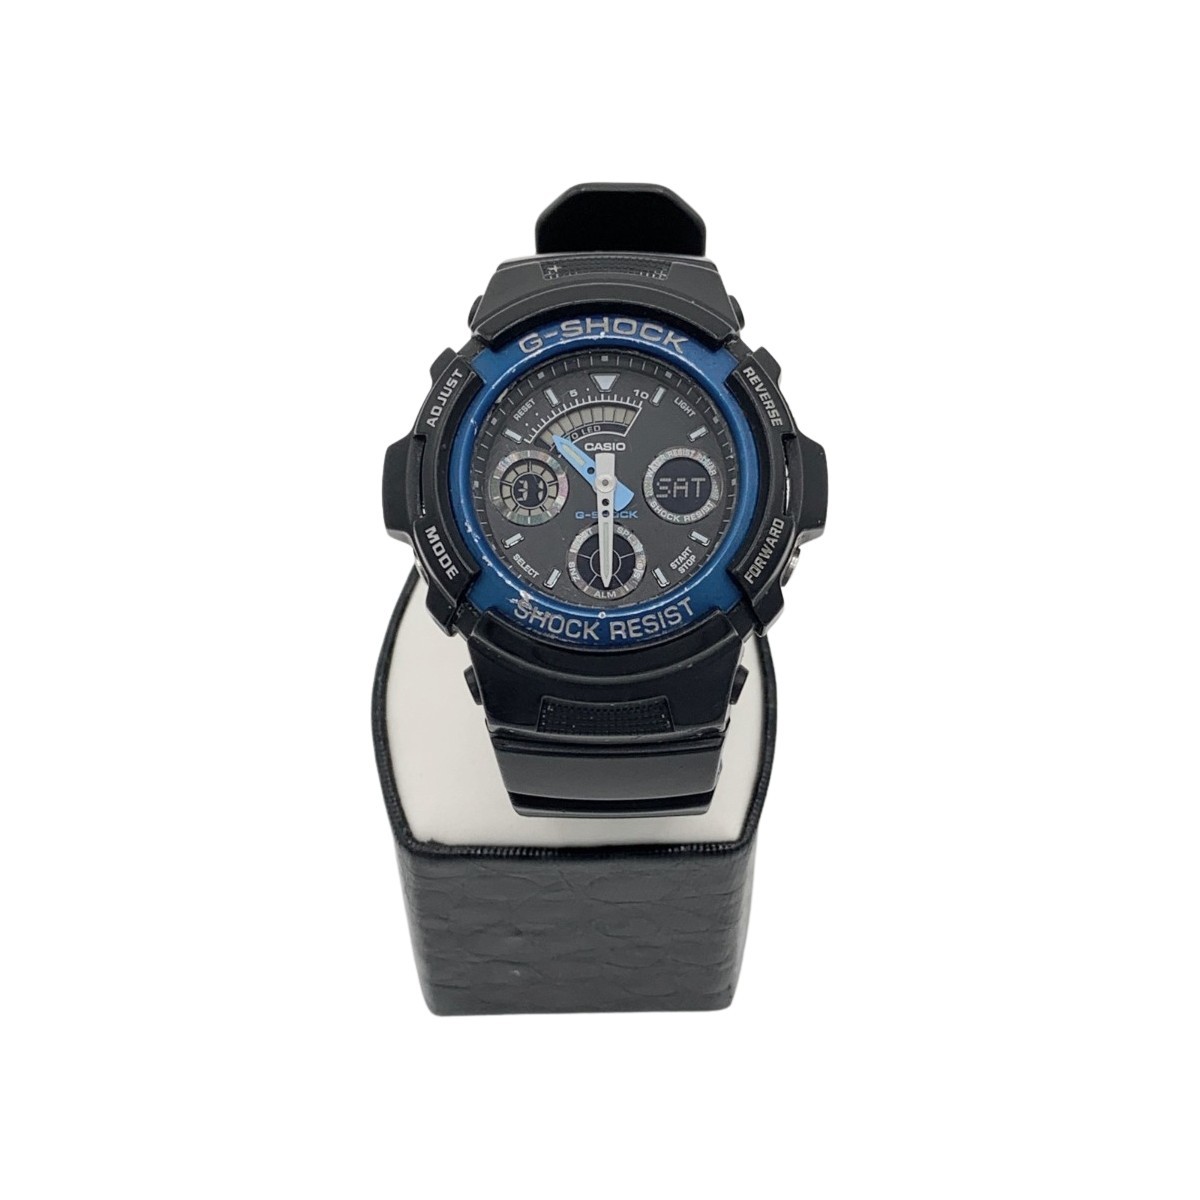 〇〇 CASIO カシオ Gショック クォーツ 腕時計 AW-591-2AJF ブラック x ブルー やや傷や汚れあり_画像1